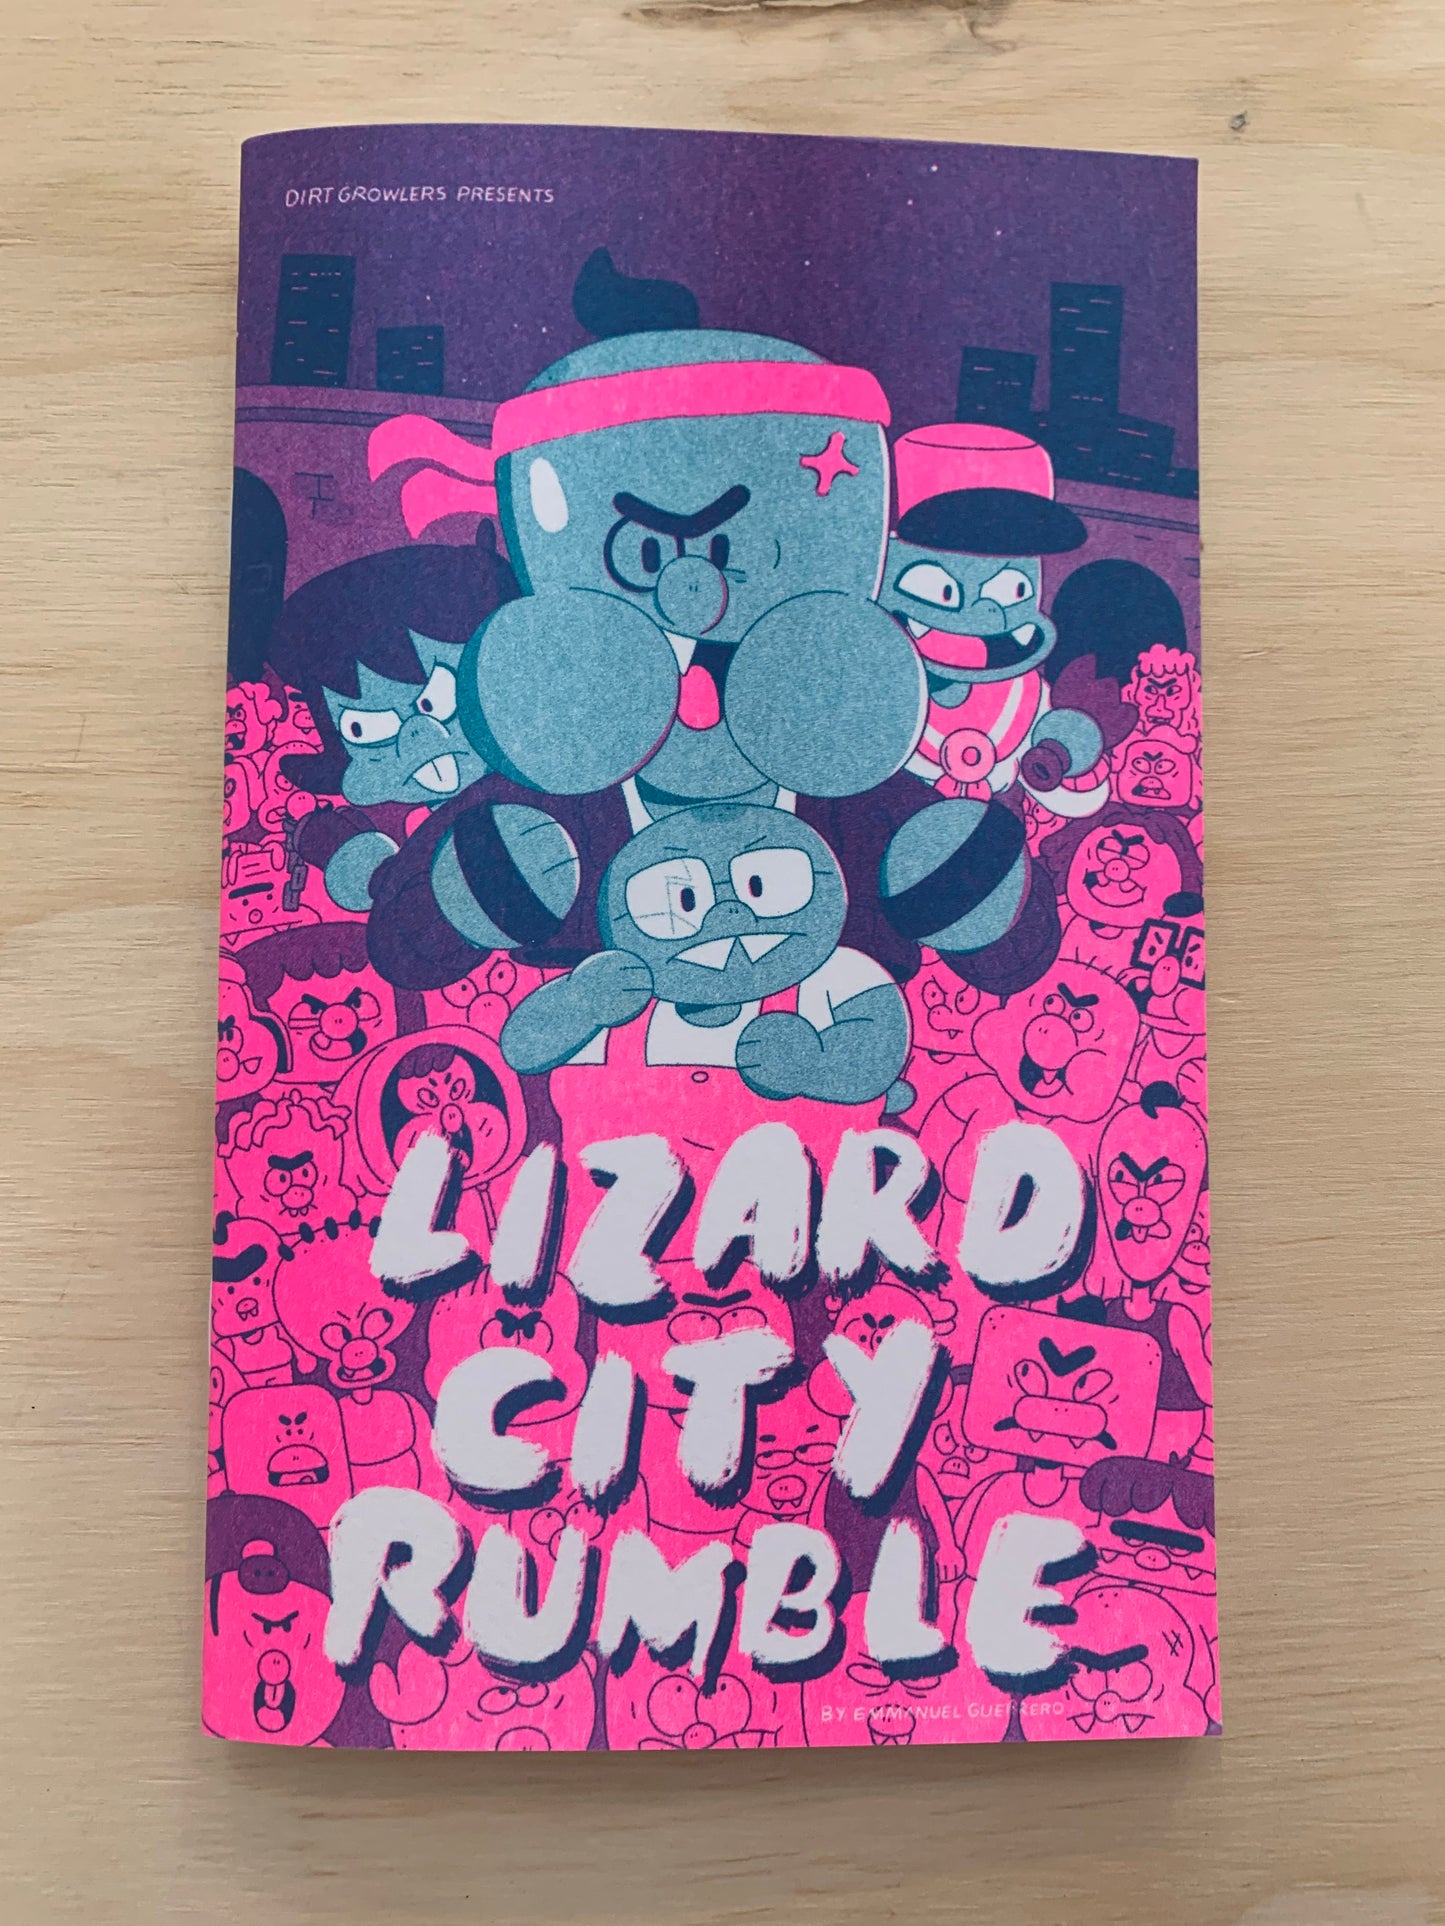 Lizard City Rumble